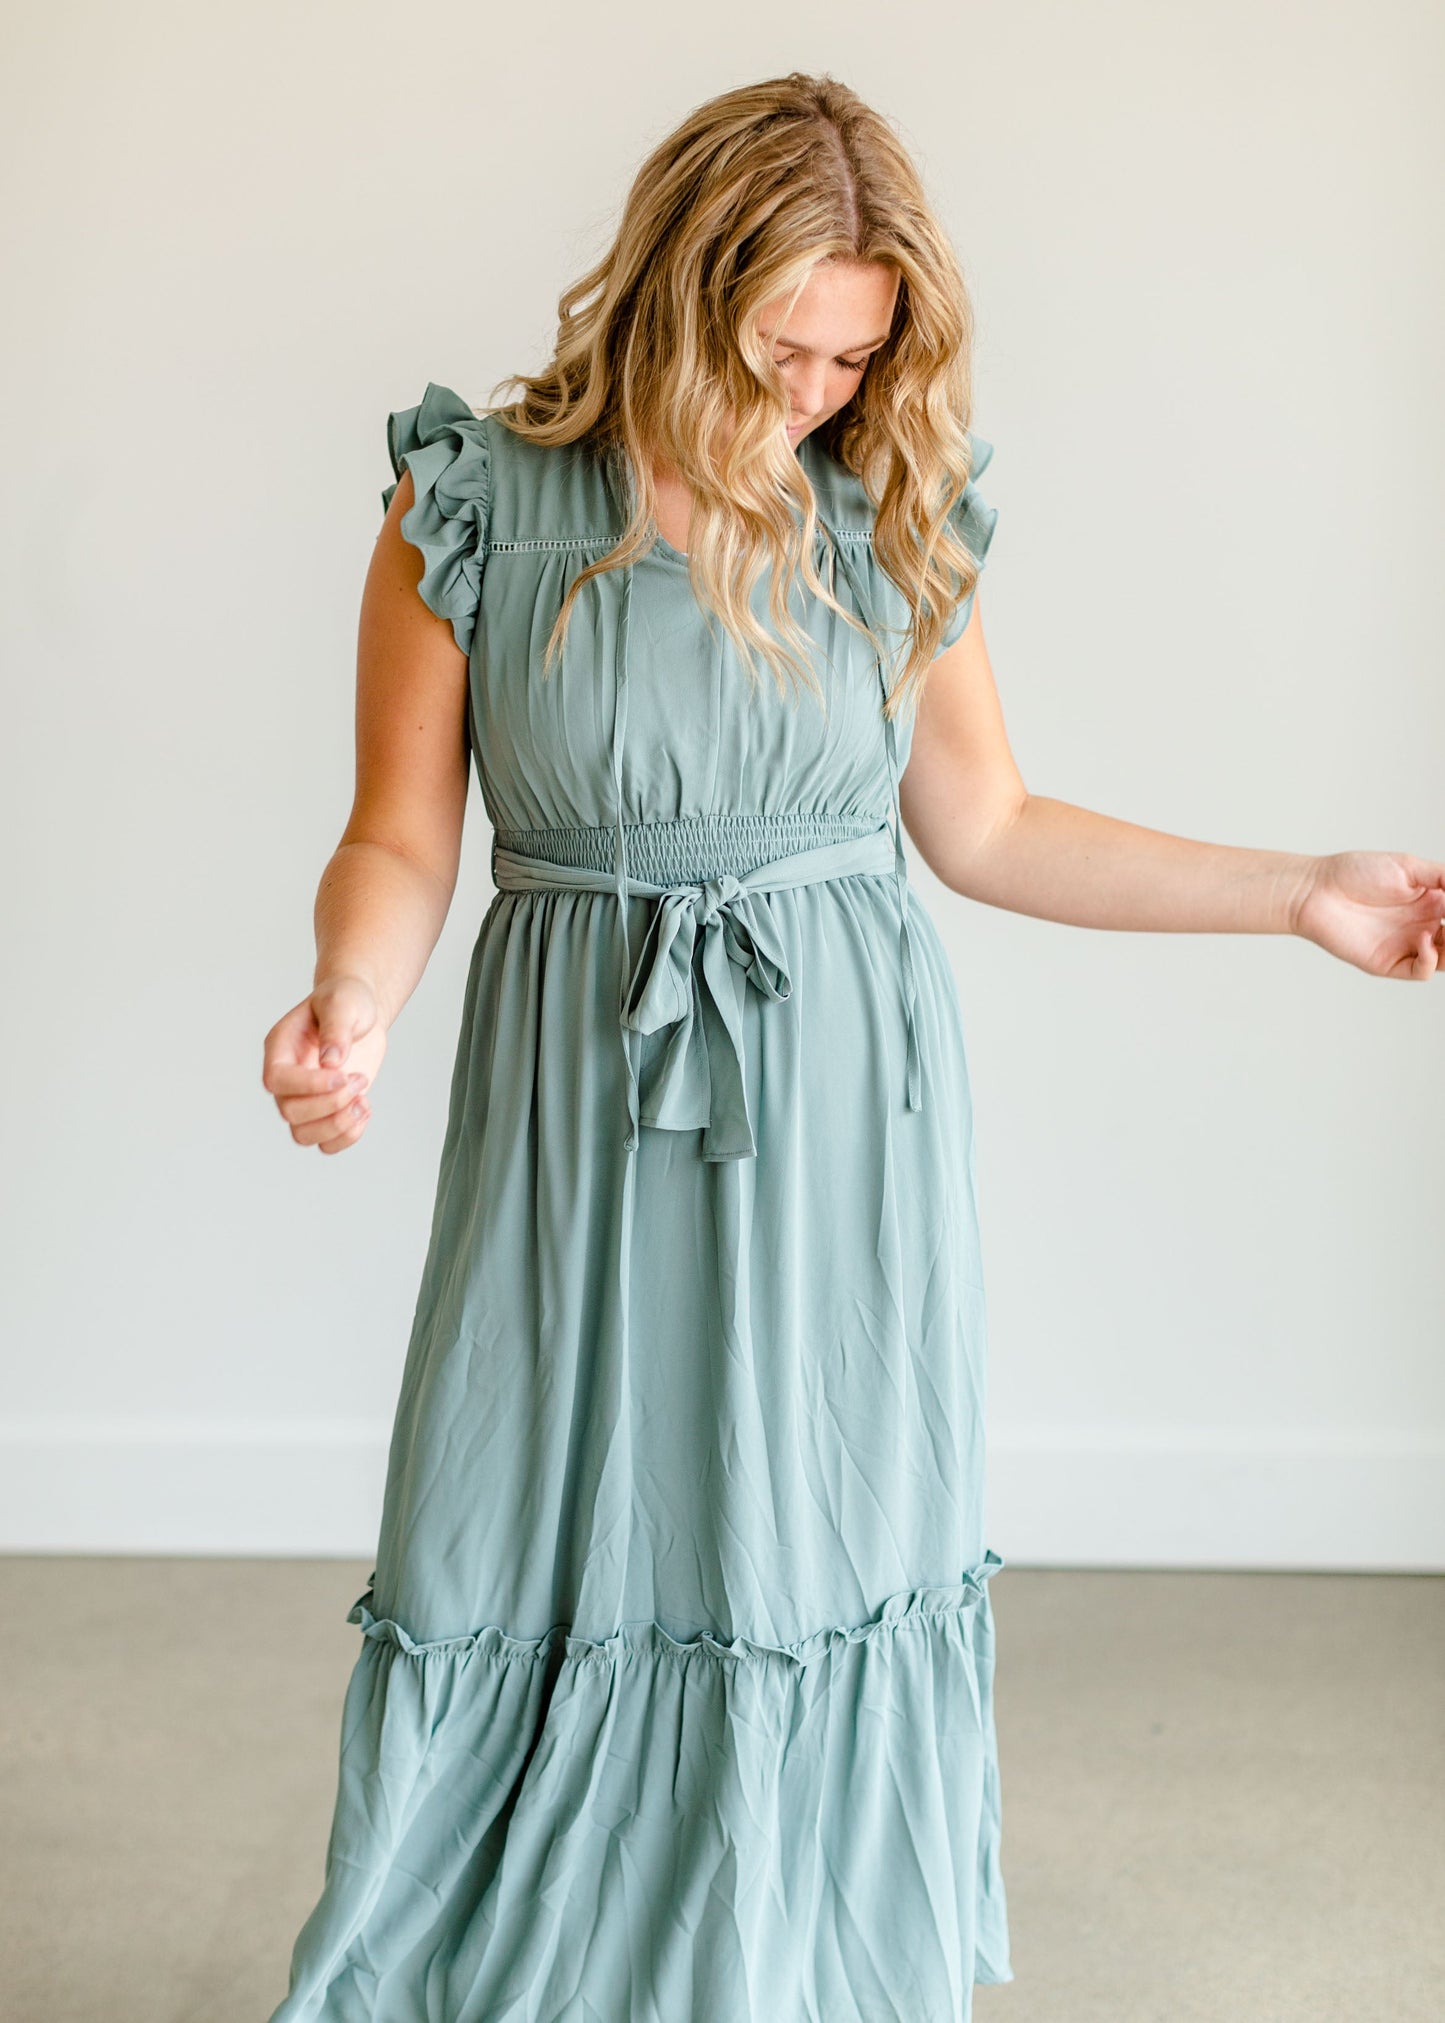 Mint Ruffle Sleeve Ruffle Maxi Dress - FINAL SALE Dresses